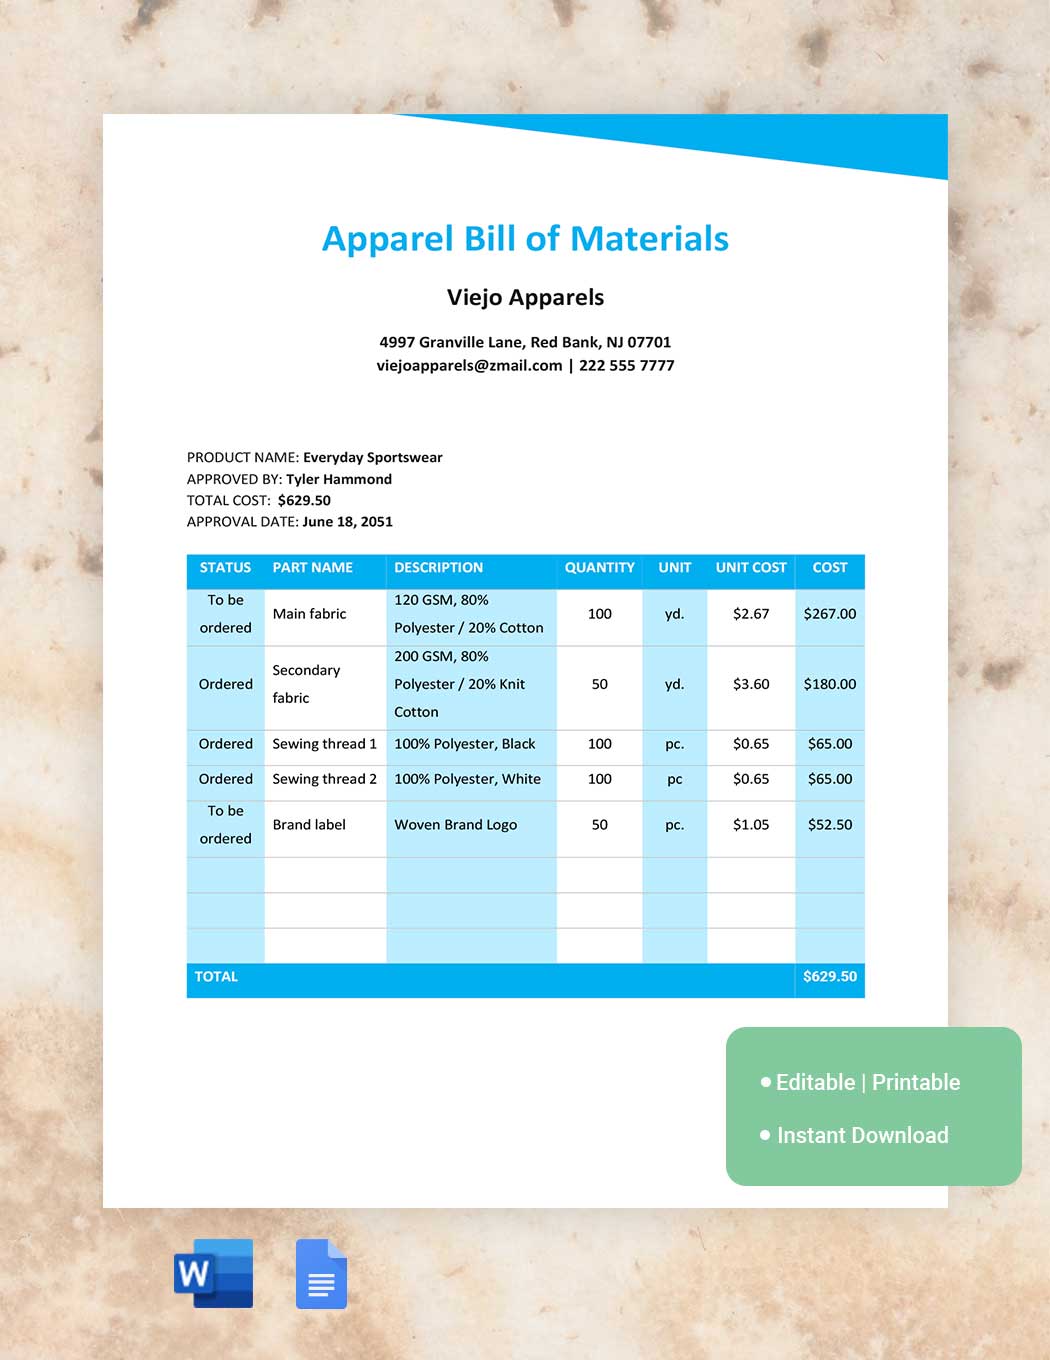 Apparel Bill Of Materials in Word, Google Docs